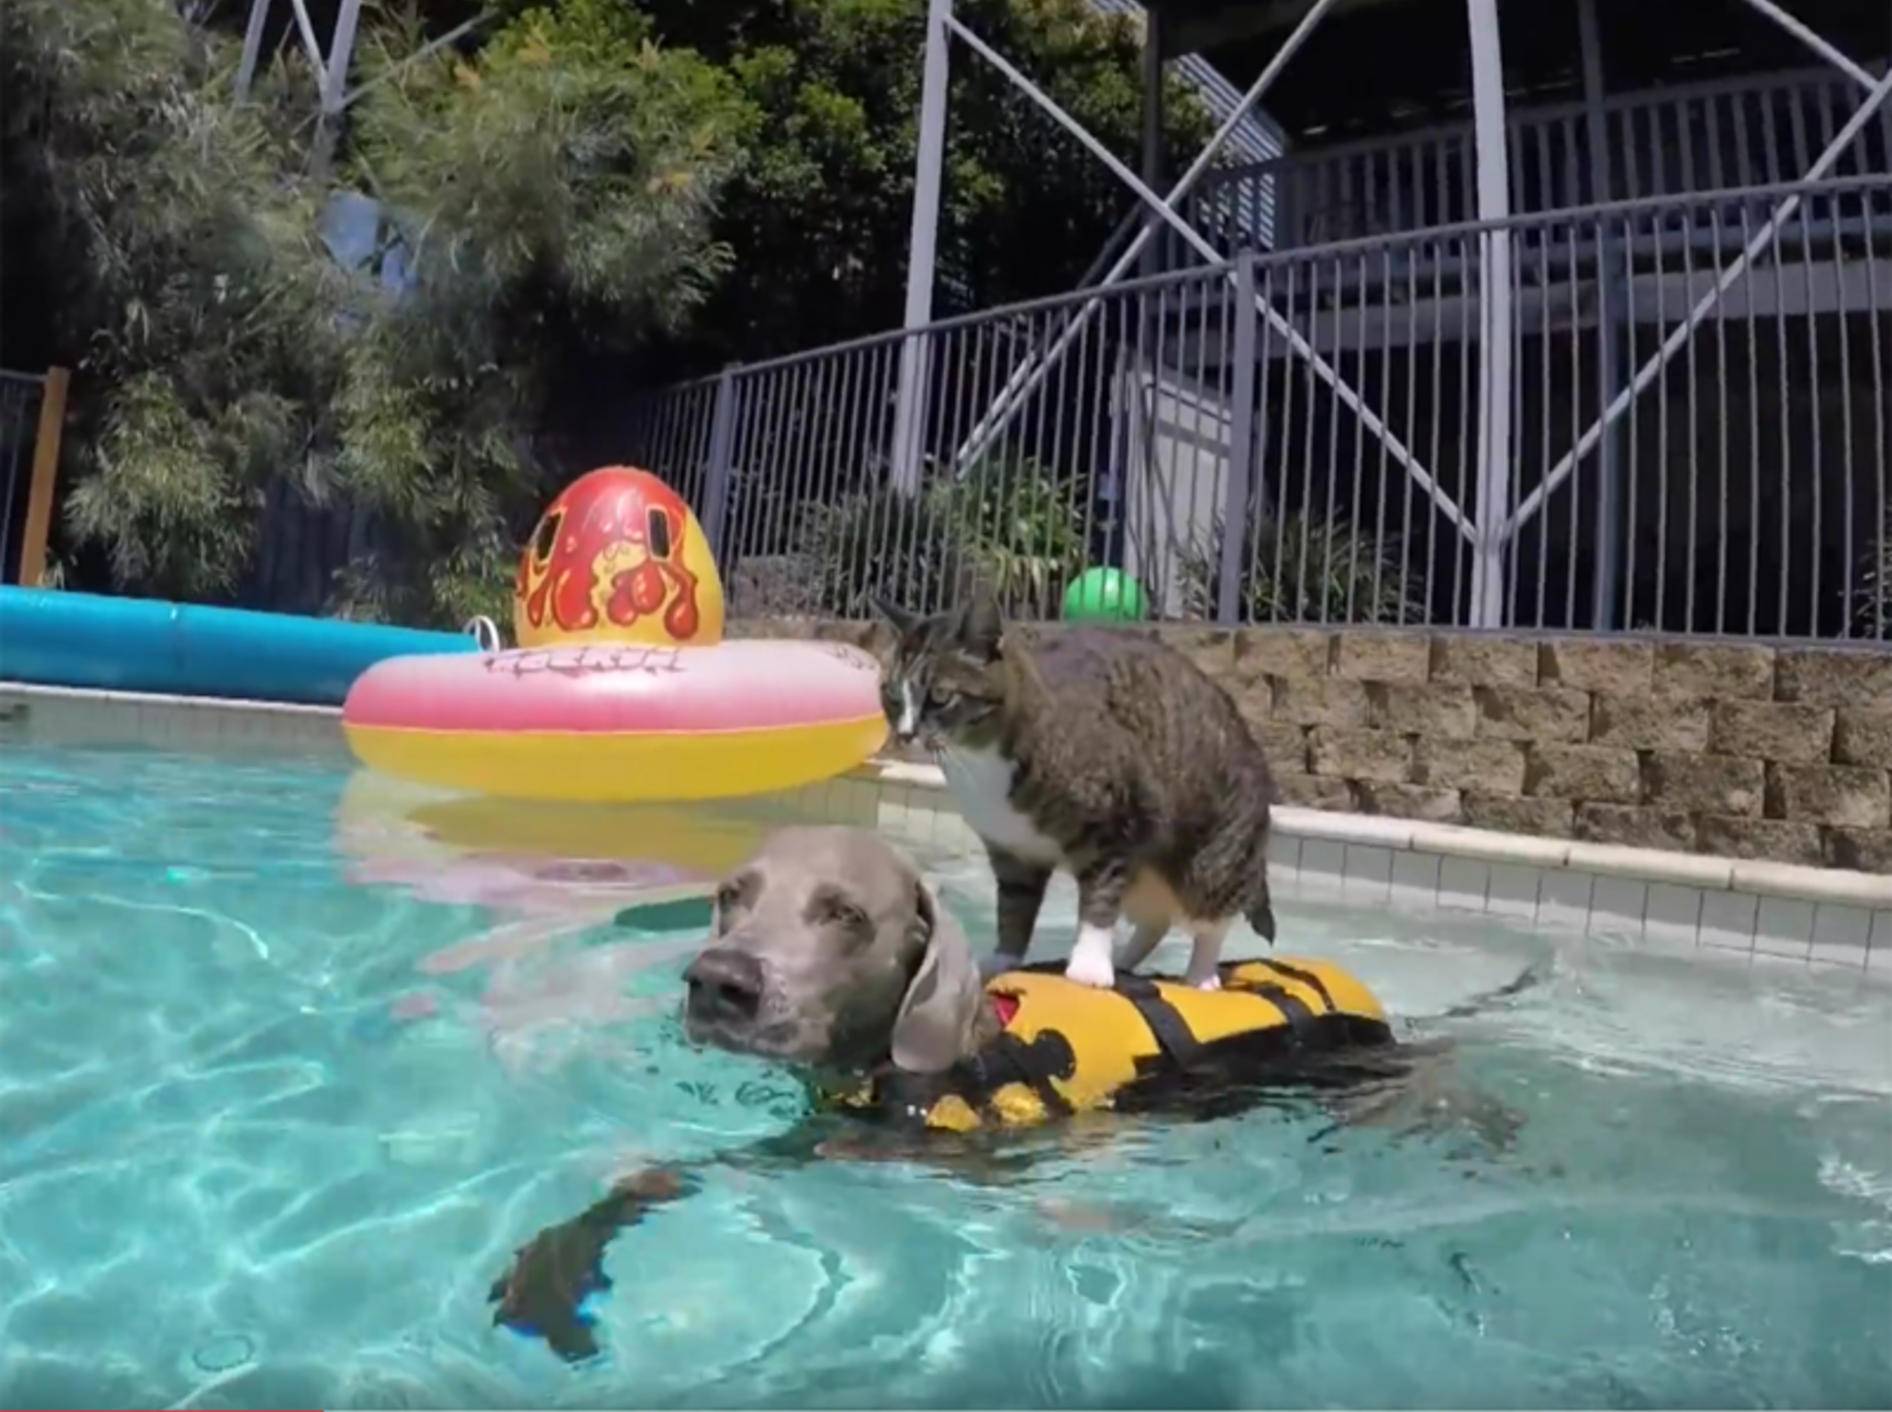 Katze Didga und Hund Ice surfen im Swimmingpool – YouTube / CATMANTOO